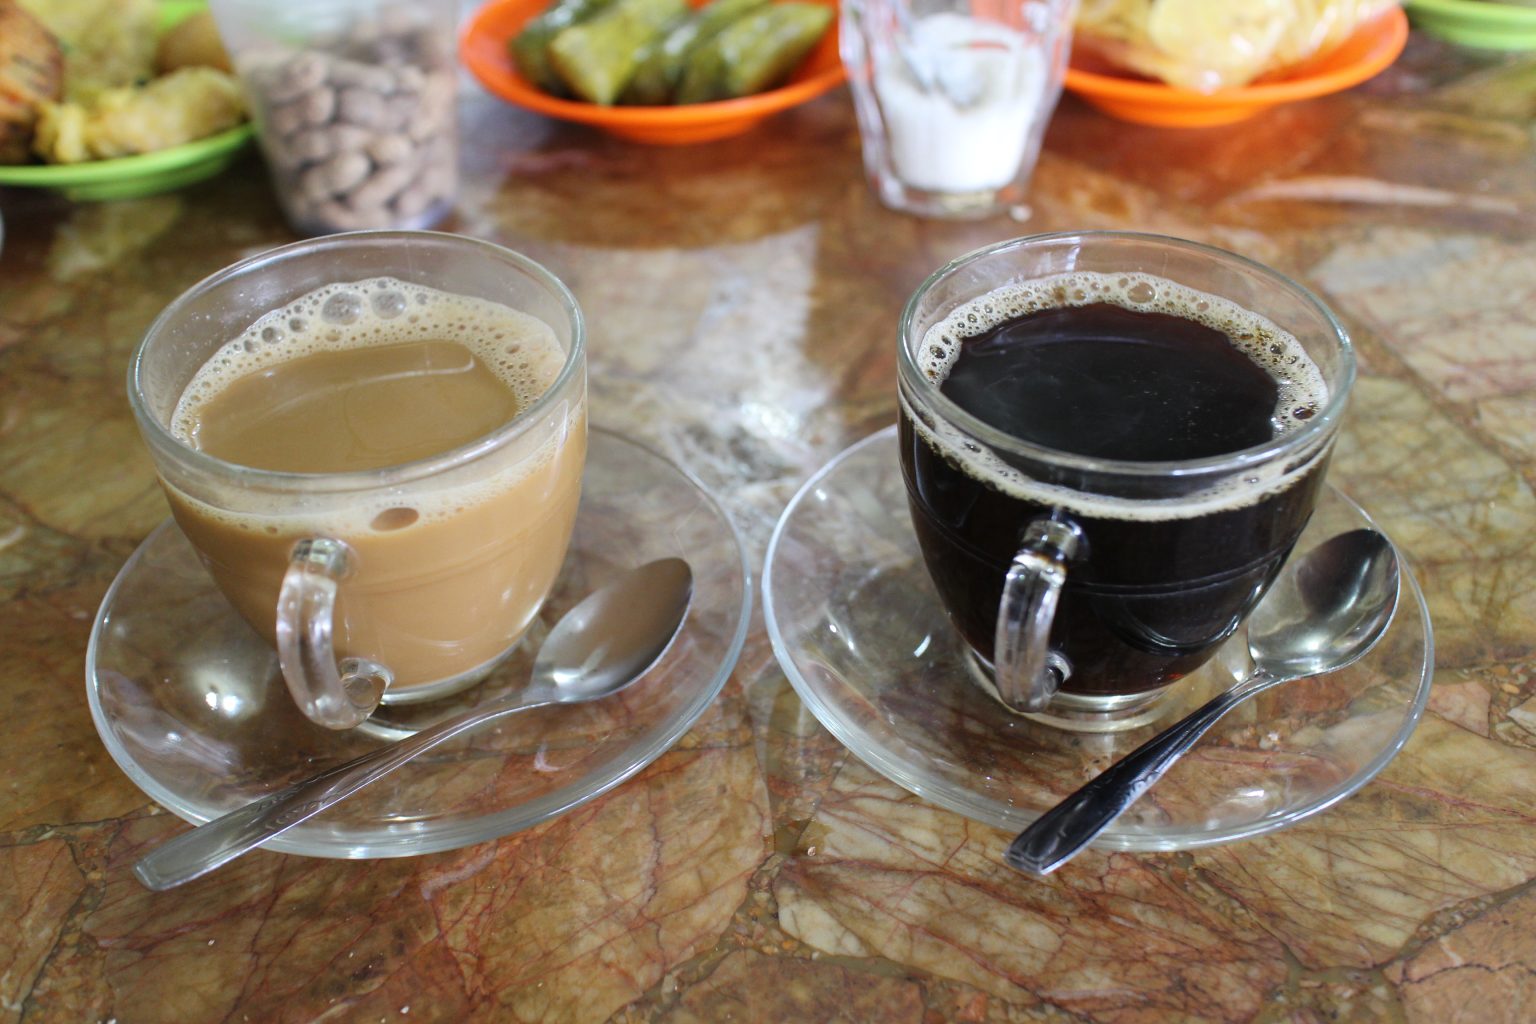 Warung Kopi & Aneka Gorengan - Coffee Shop Recommend!